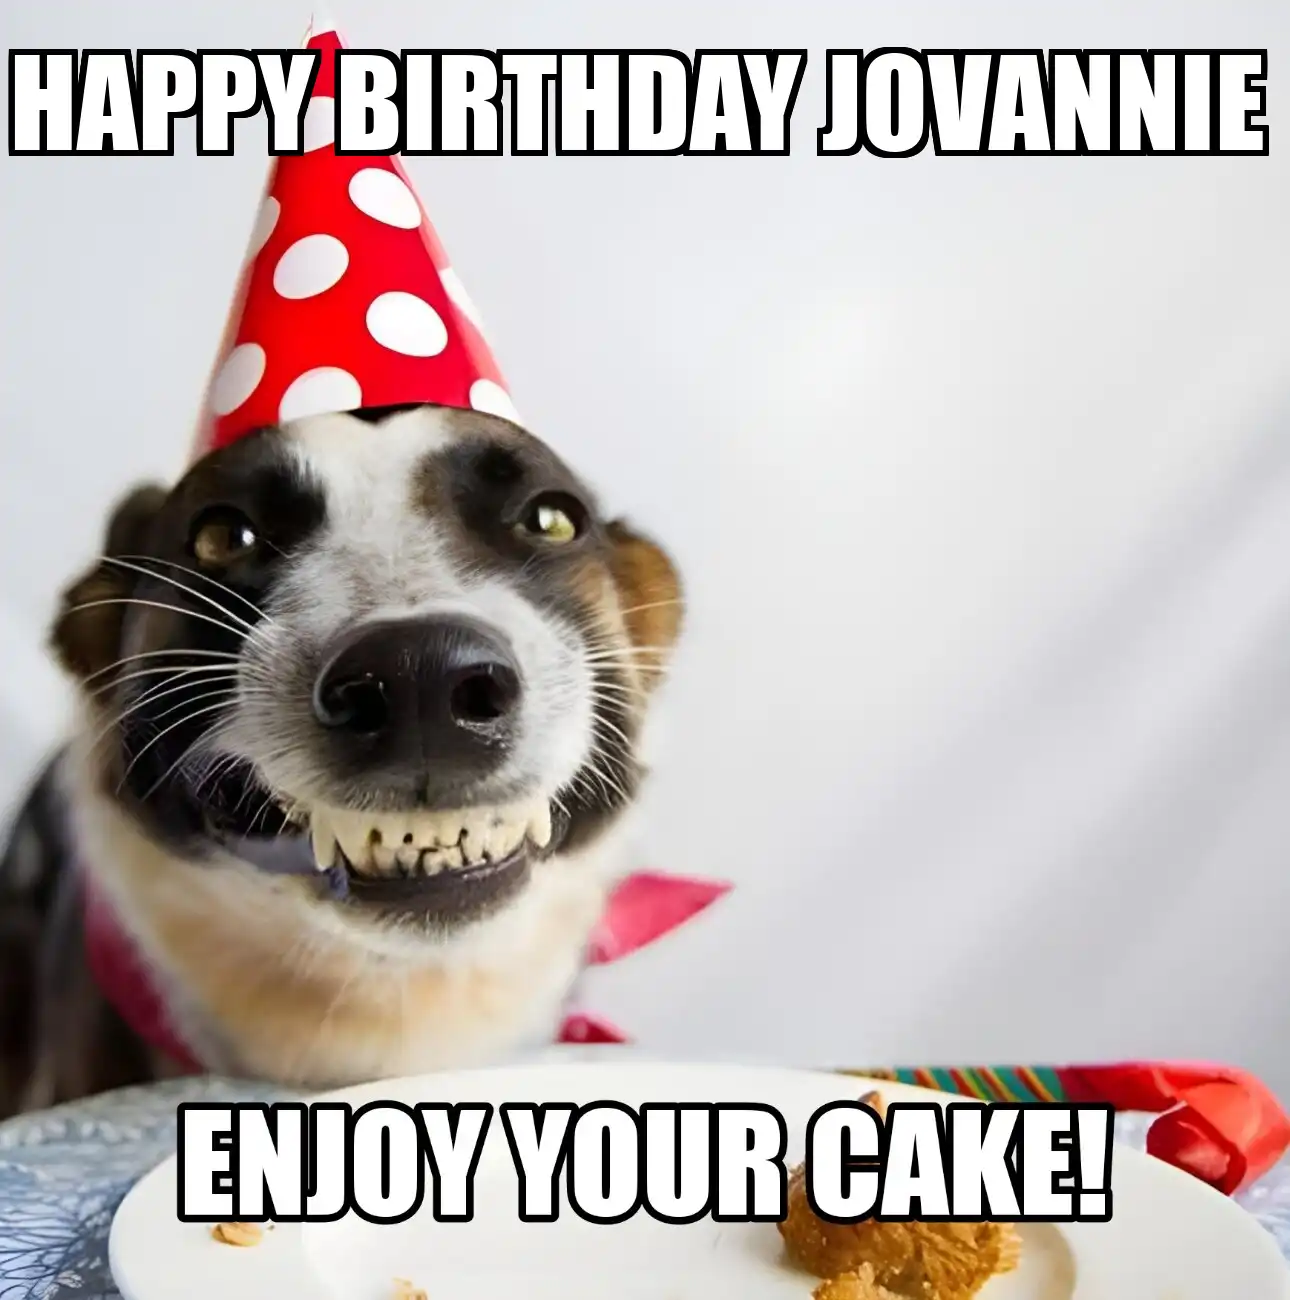 Happy Birthday Jovannie Enjoy Your Cake Dog Meme